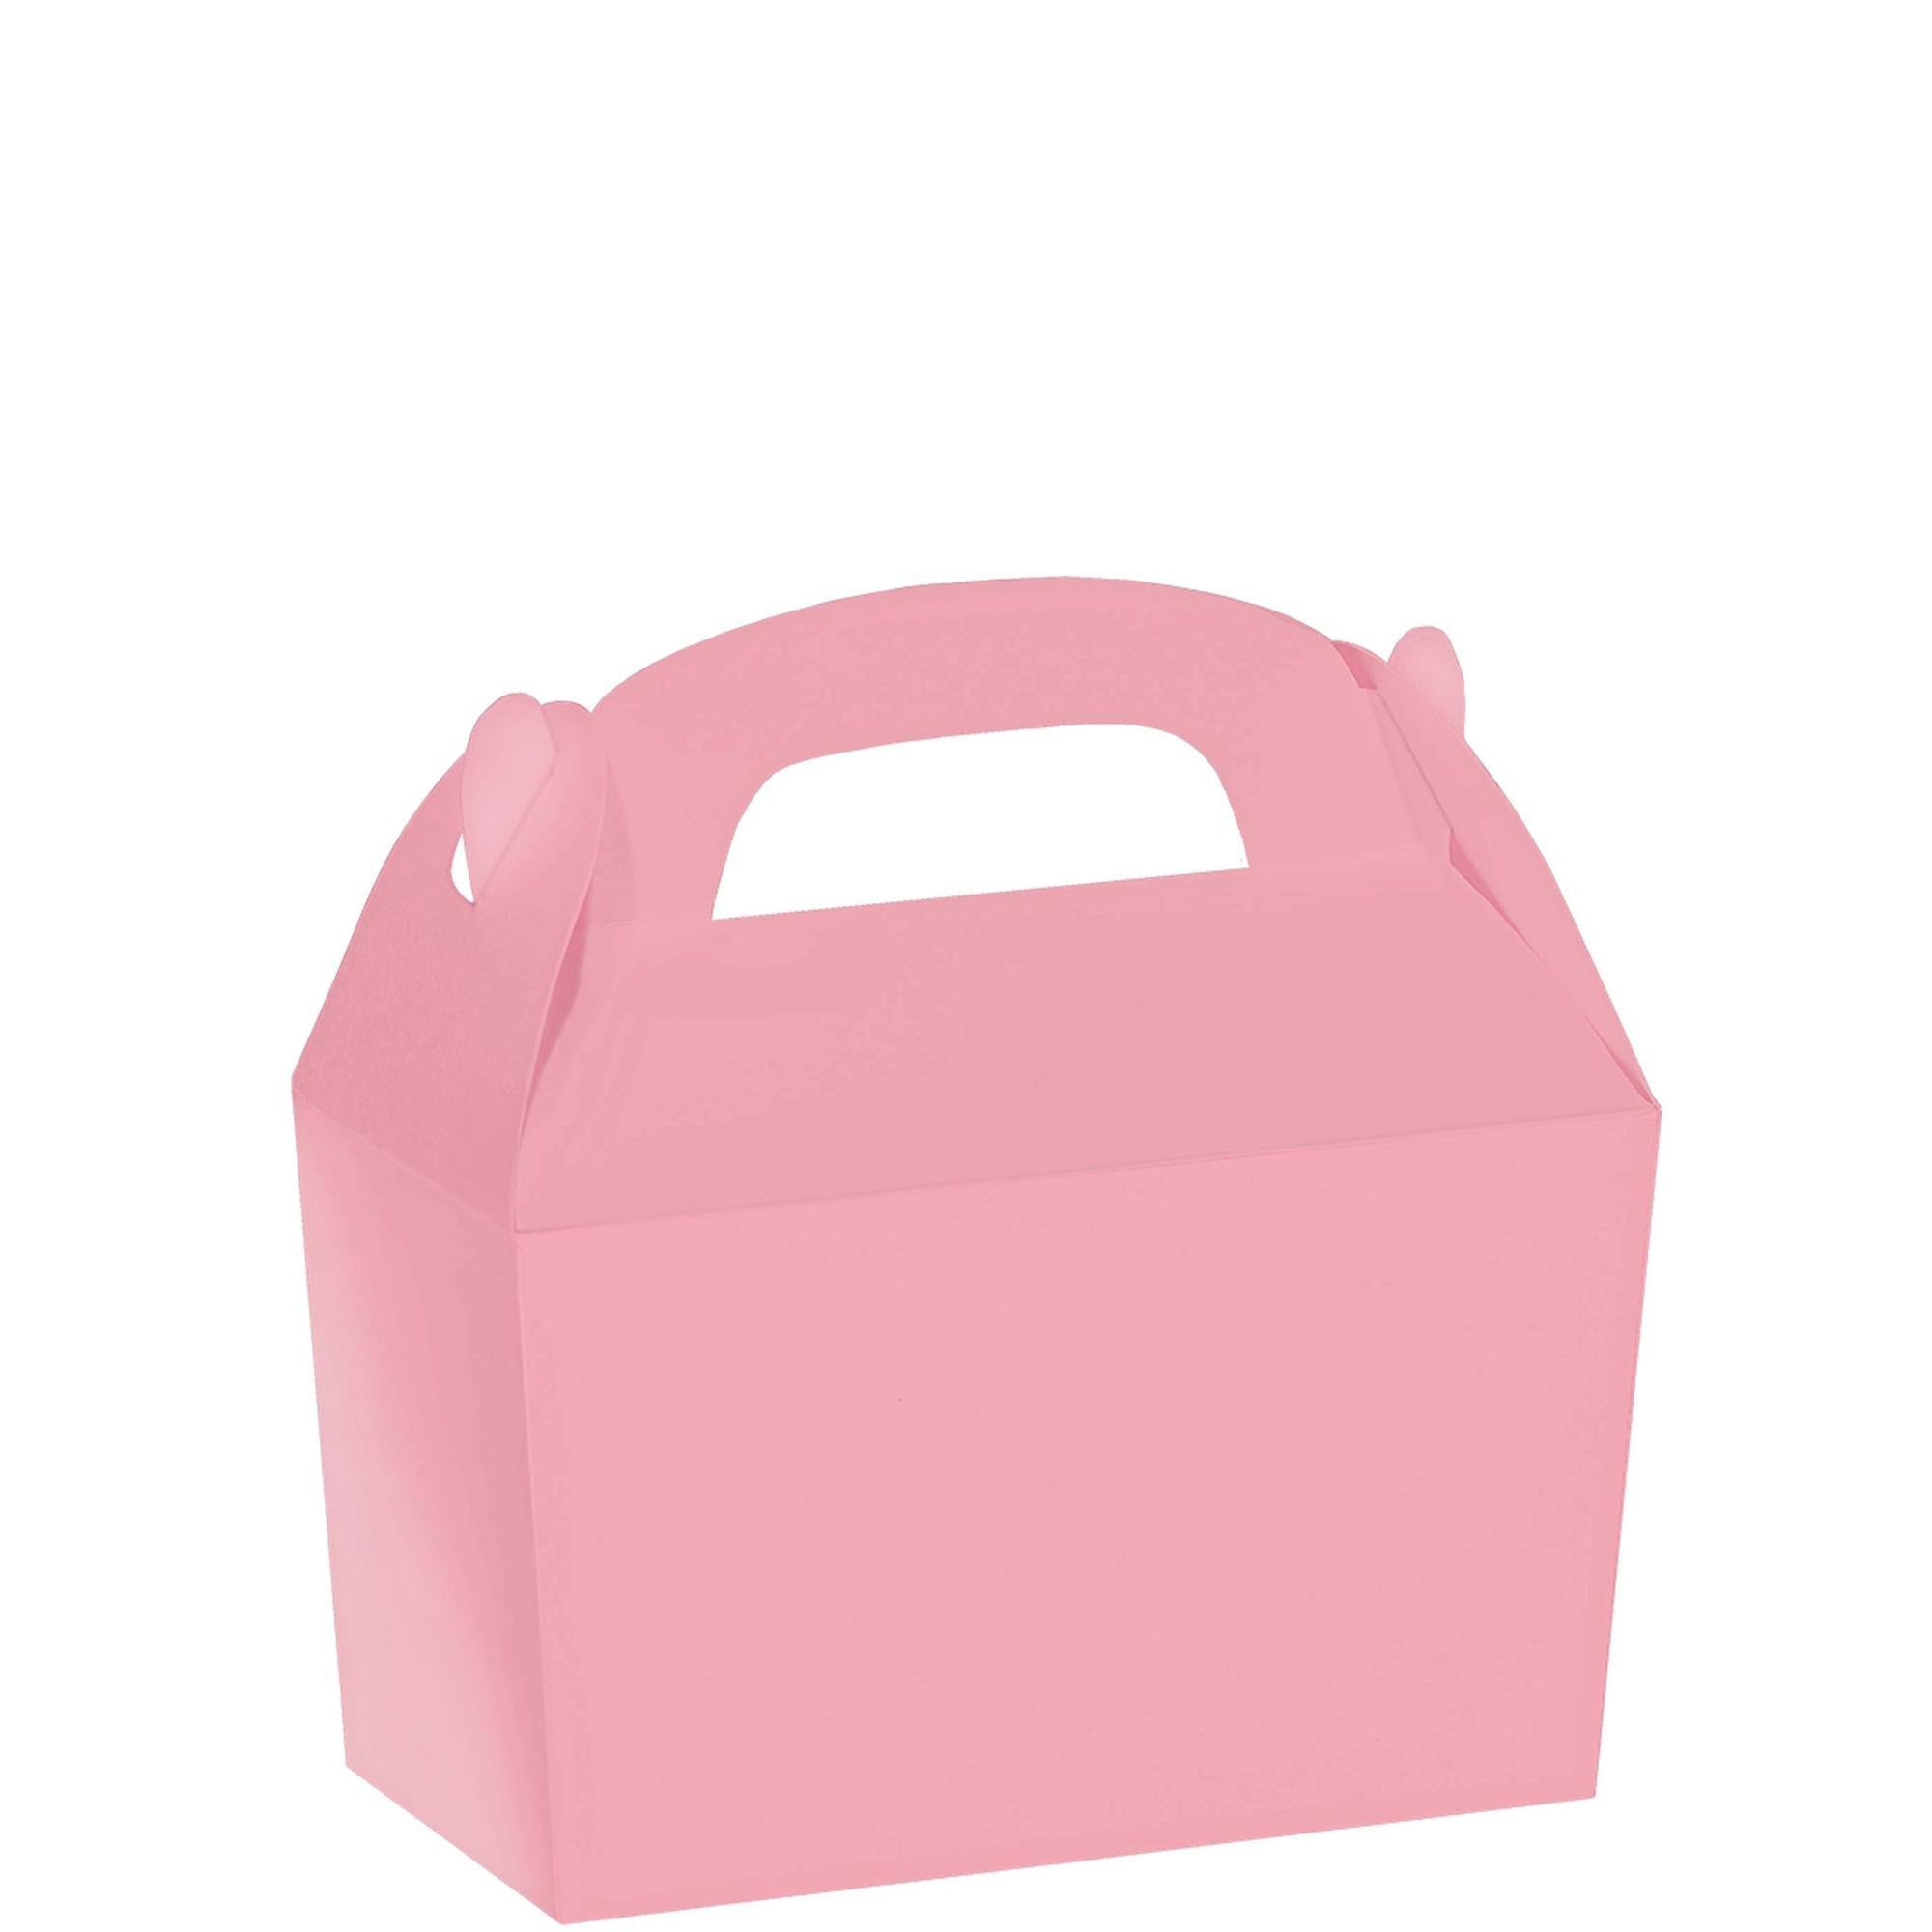 New Pink Gable Box Favours - Party Centre - Party Centre